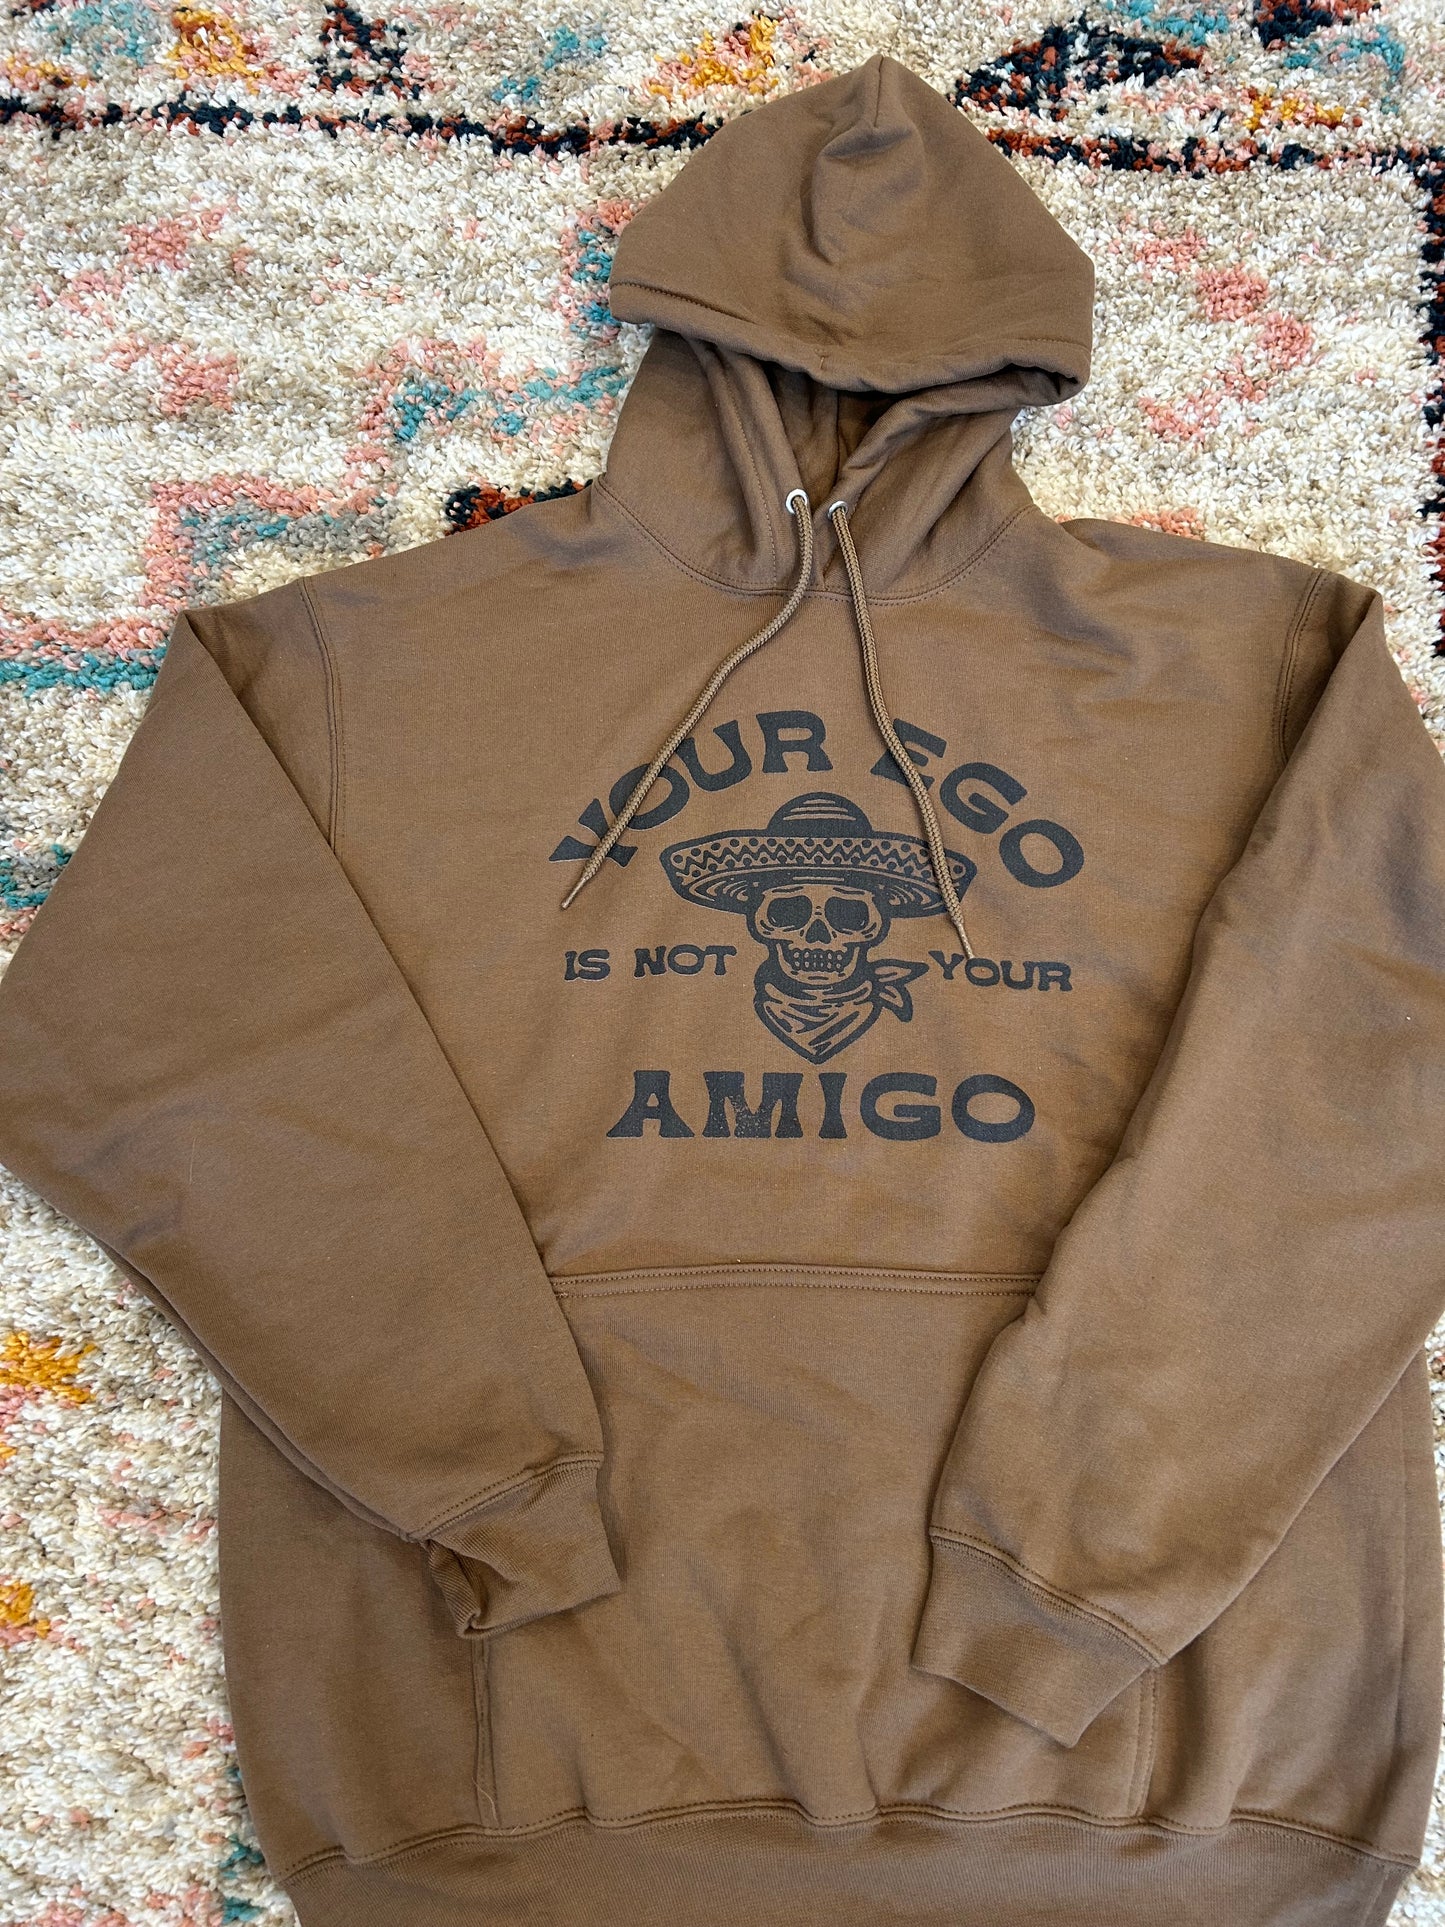 Not your amigo hoodie